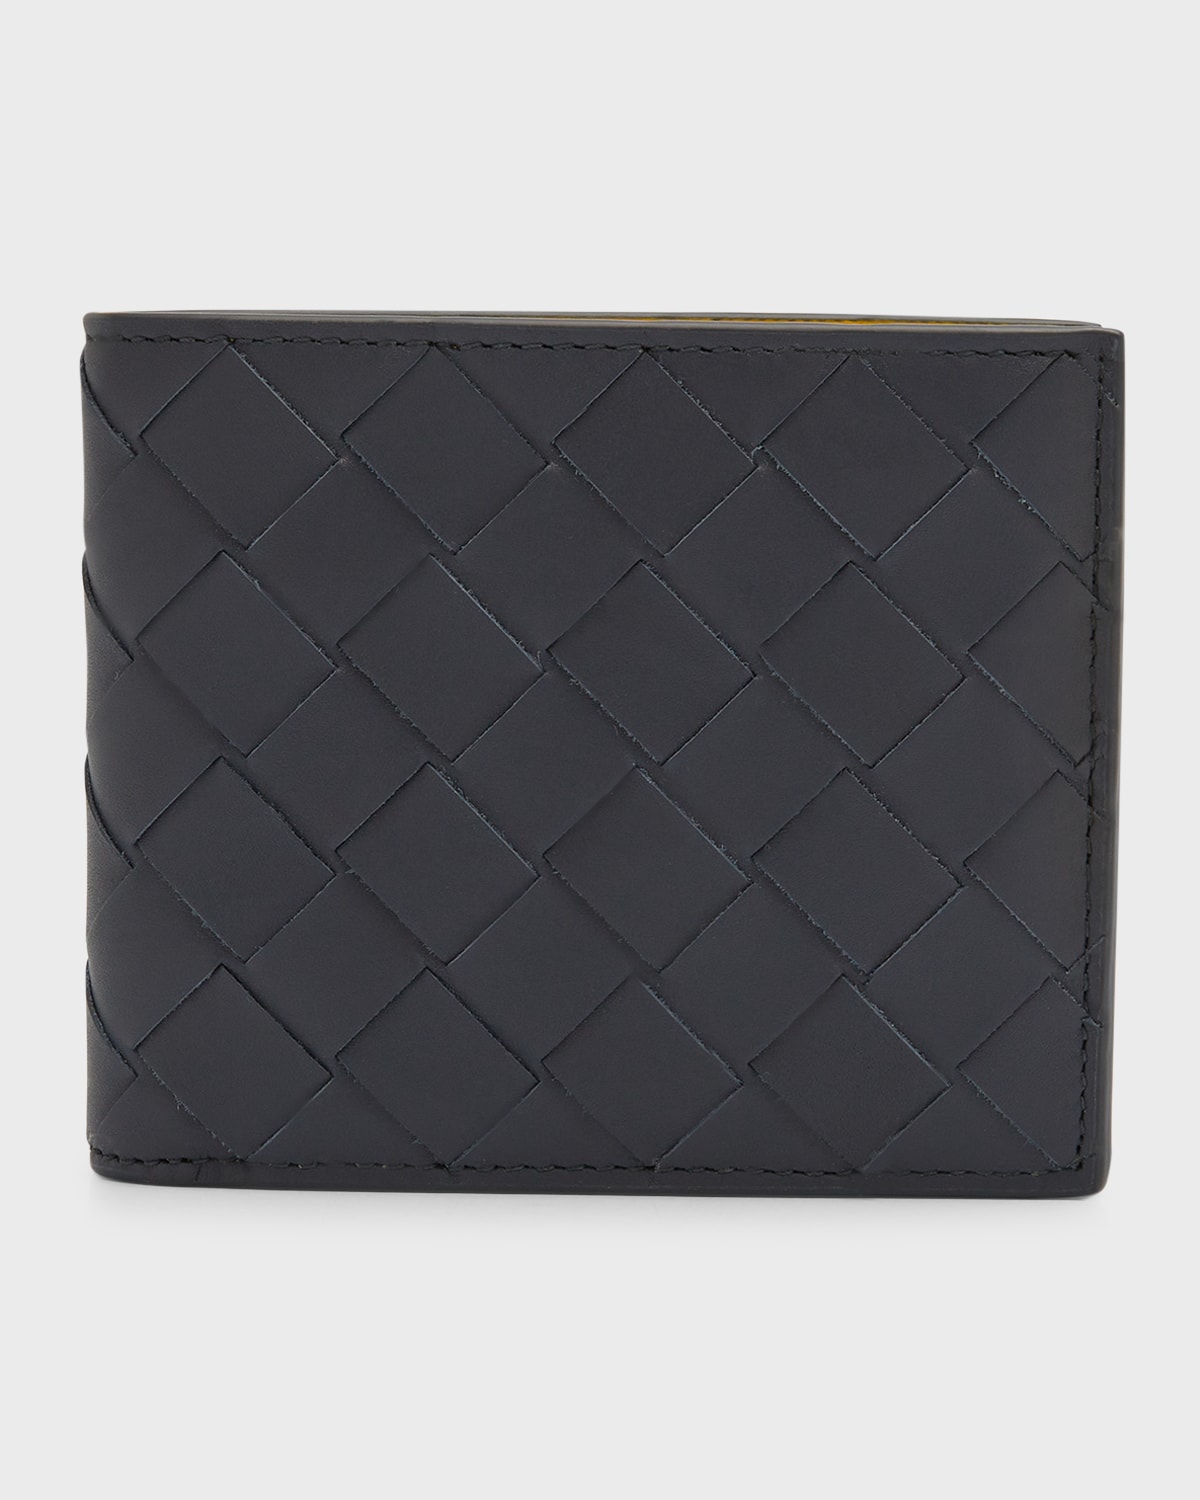 Bottega Veneta Men's Bicolor Intrecciato Leather Bifold Wallet